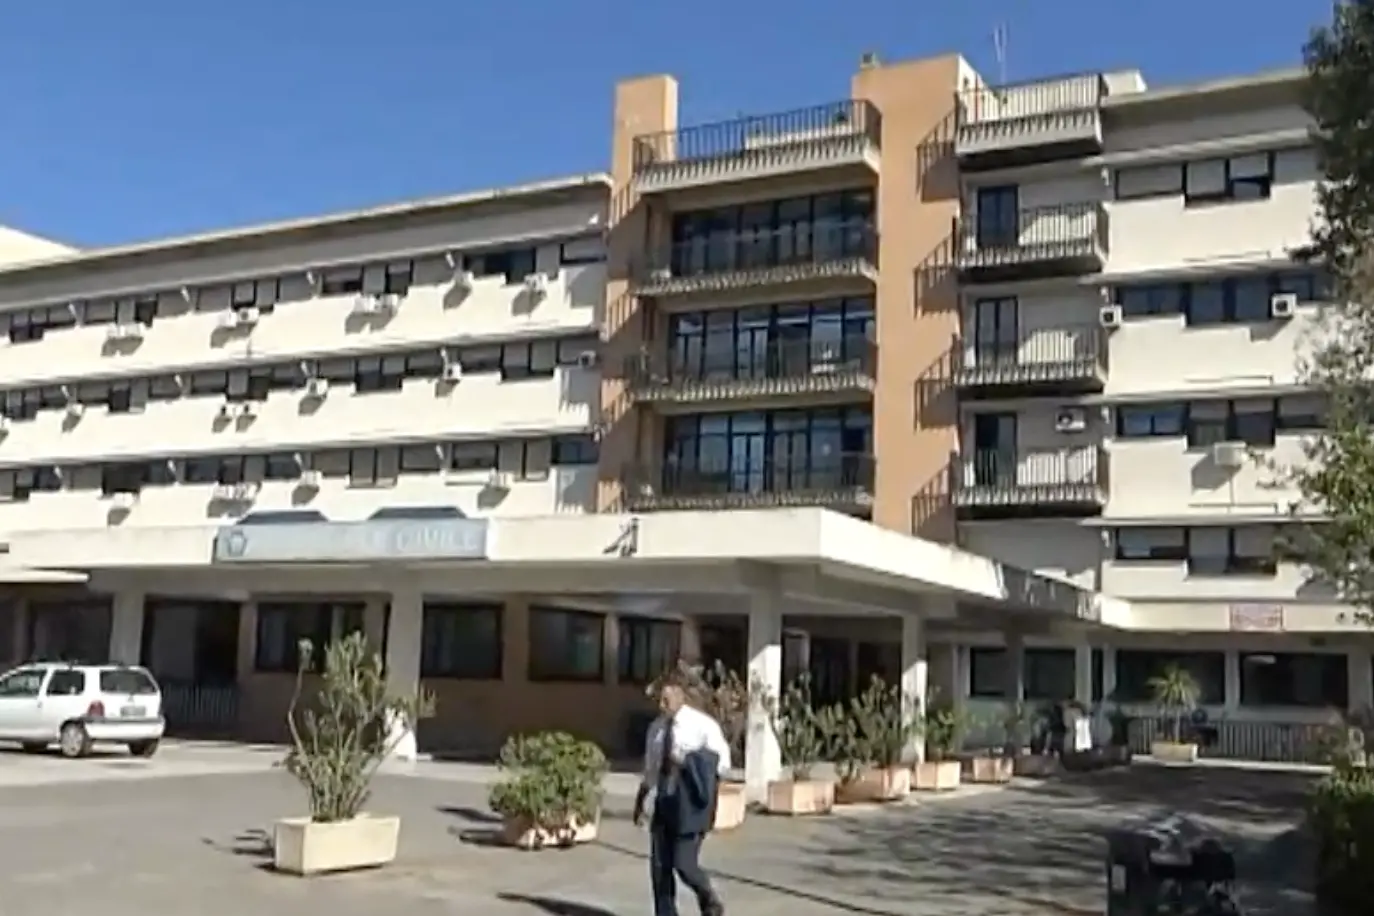 L'ospedale Civile di Alghero (foto Fiori)